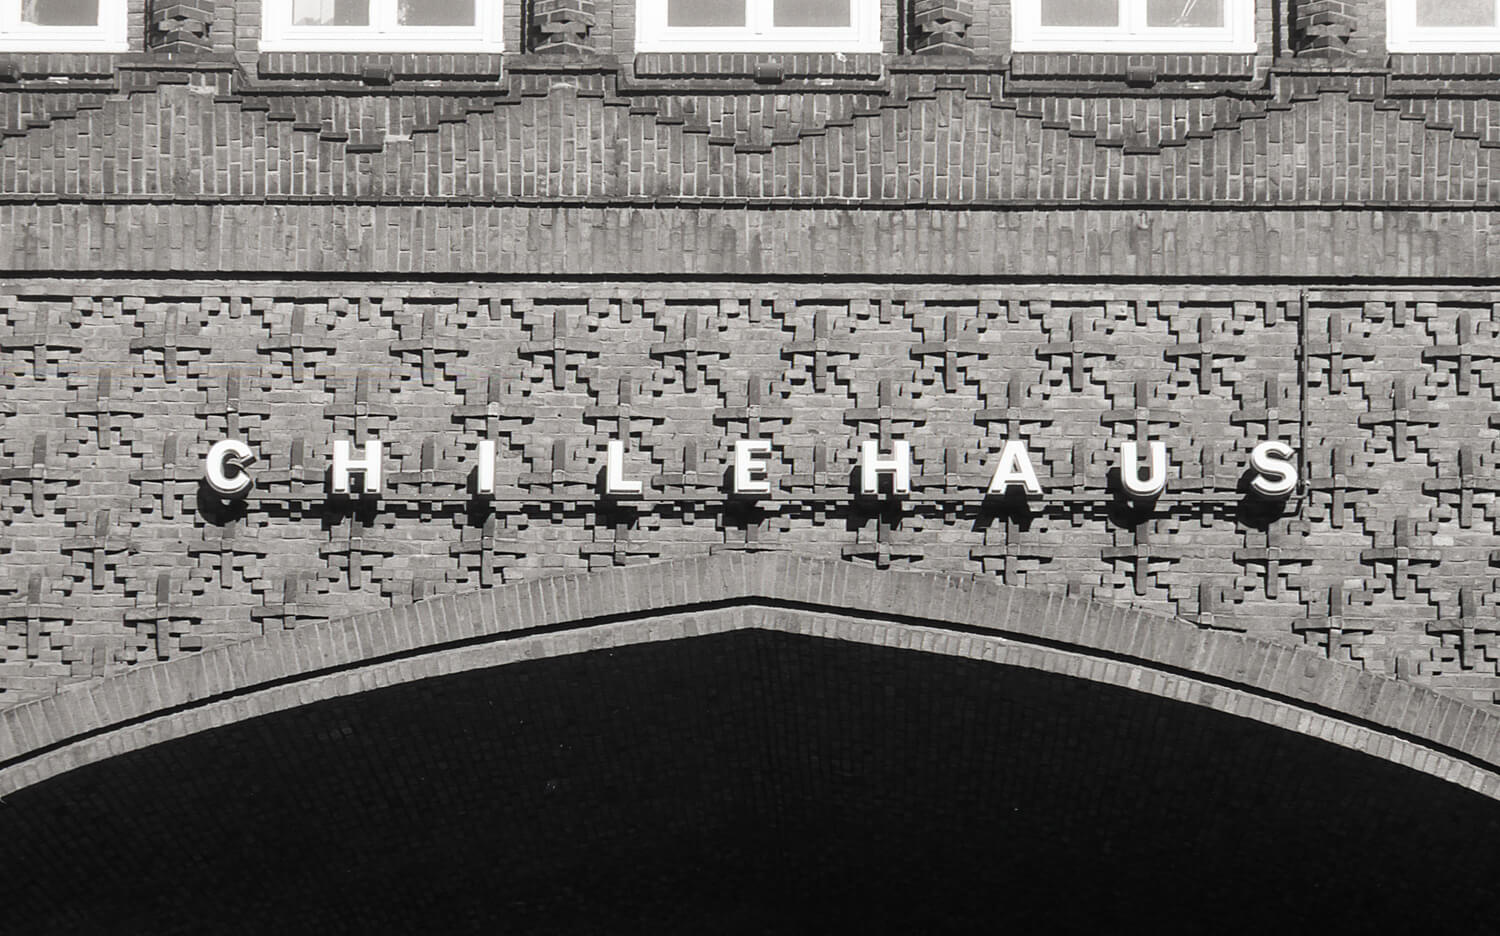 The Chilehaus façade Hamburg. 135mm, f/2.8 Auto-Exaktar. f8, 1/250s